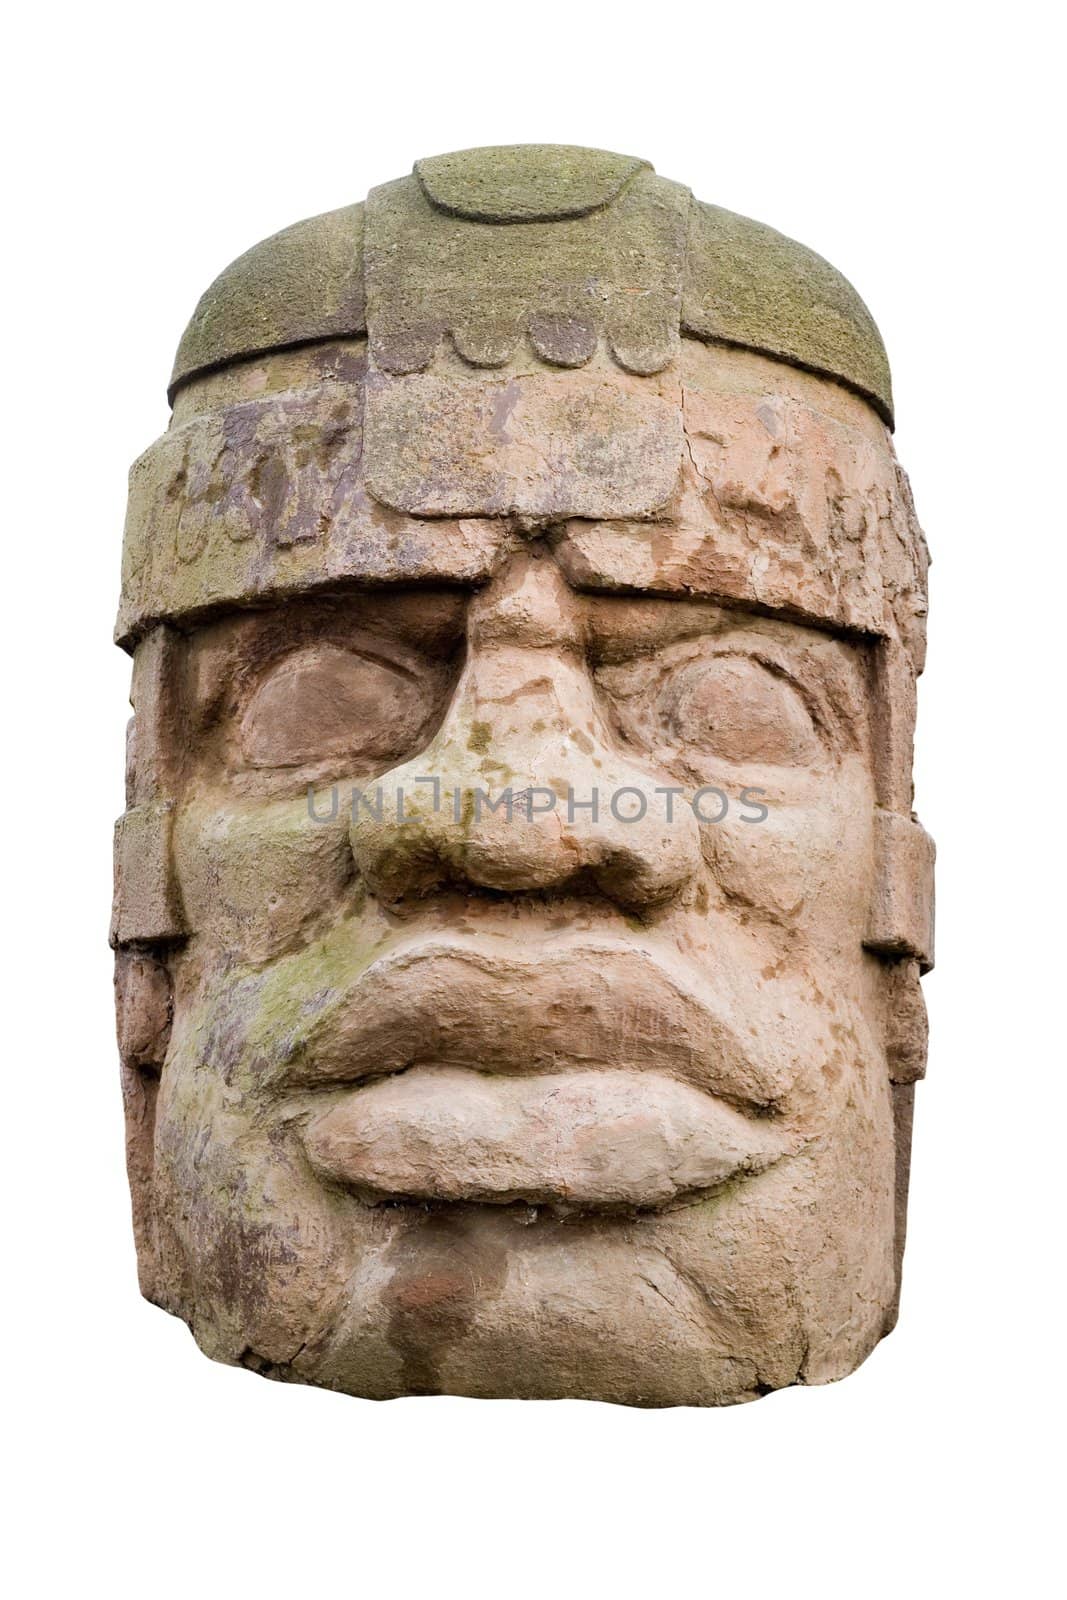 ancient olmec head by furzyk73